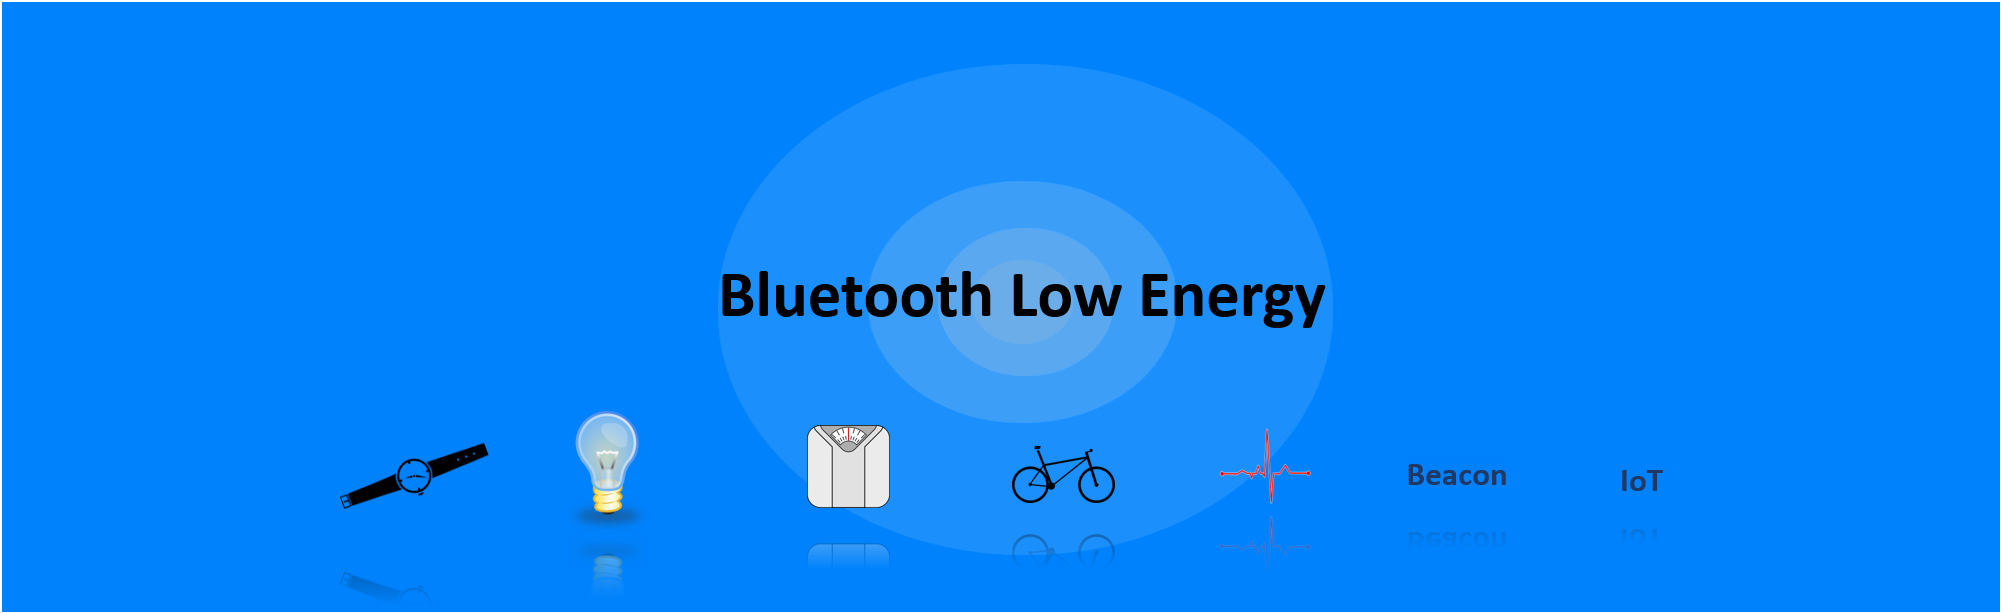 Bluetooth Low Energy технология. Ble (Bluetooth Low Energy) картинки. Bluetooth Low Energy 5..